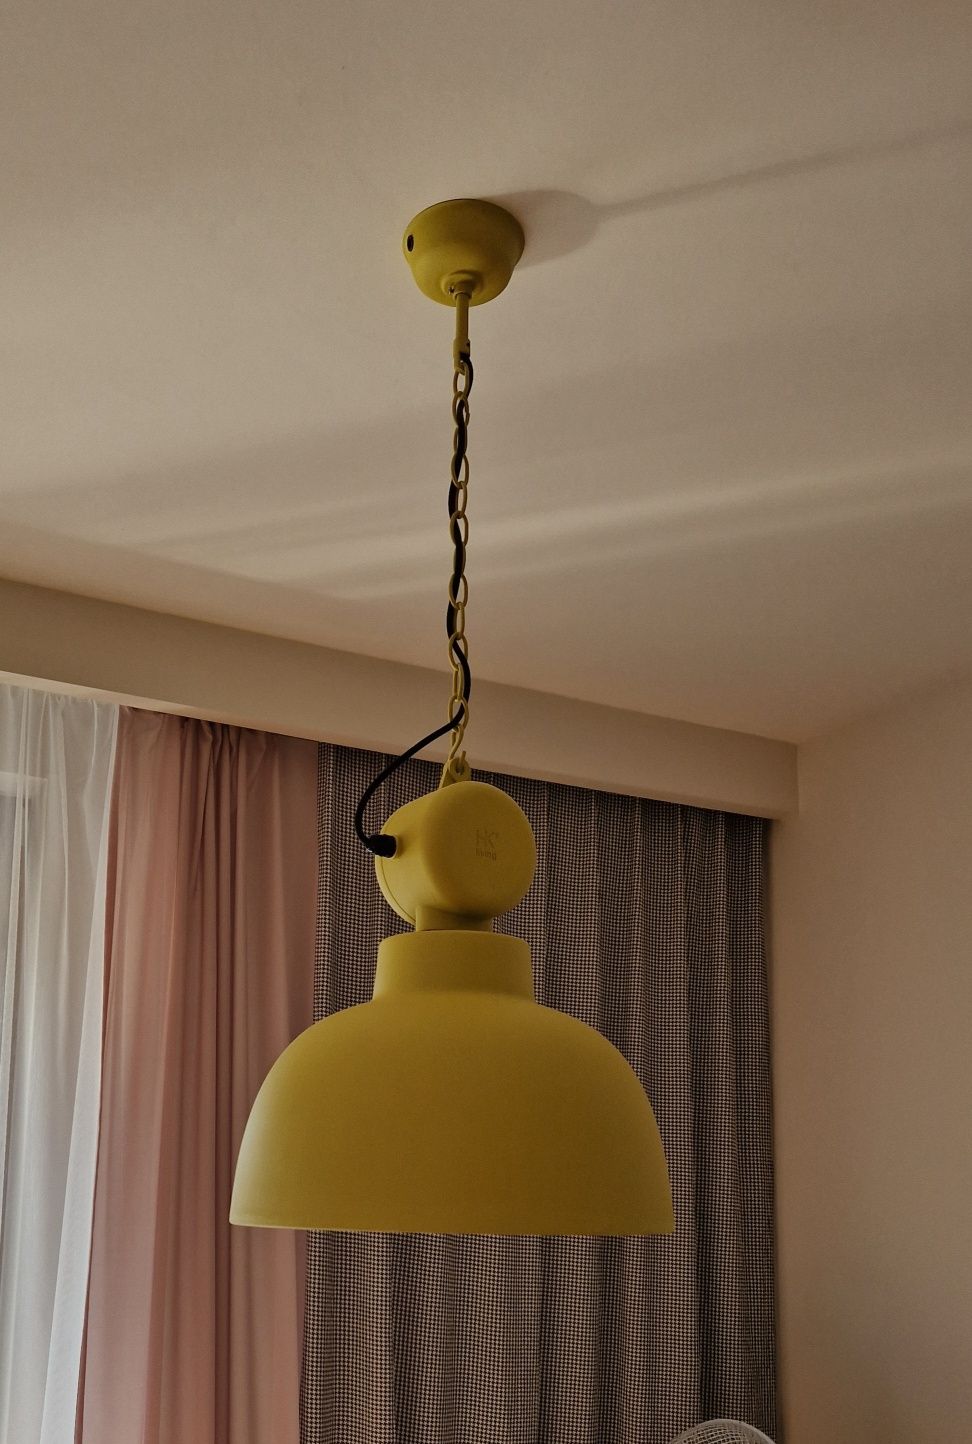 Żółta lampa wisząca Factory M (matowa) - HK Living